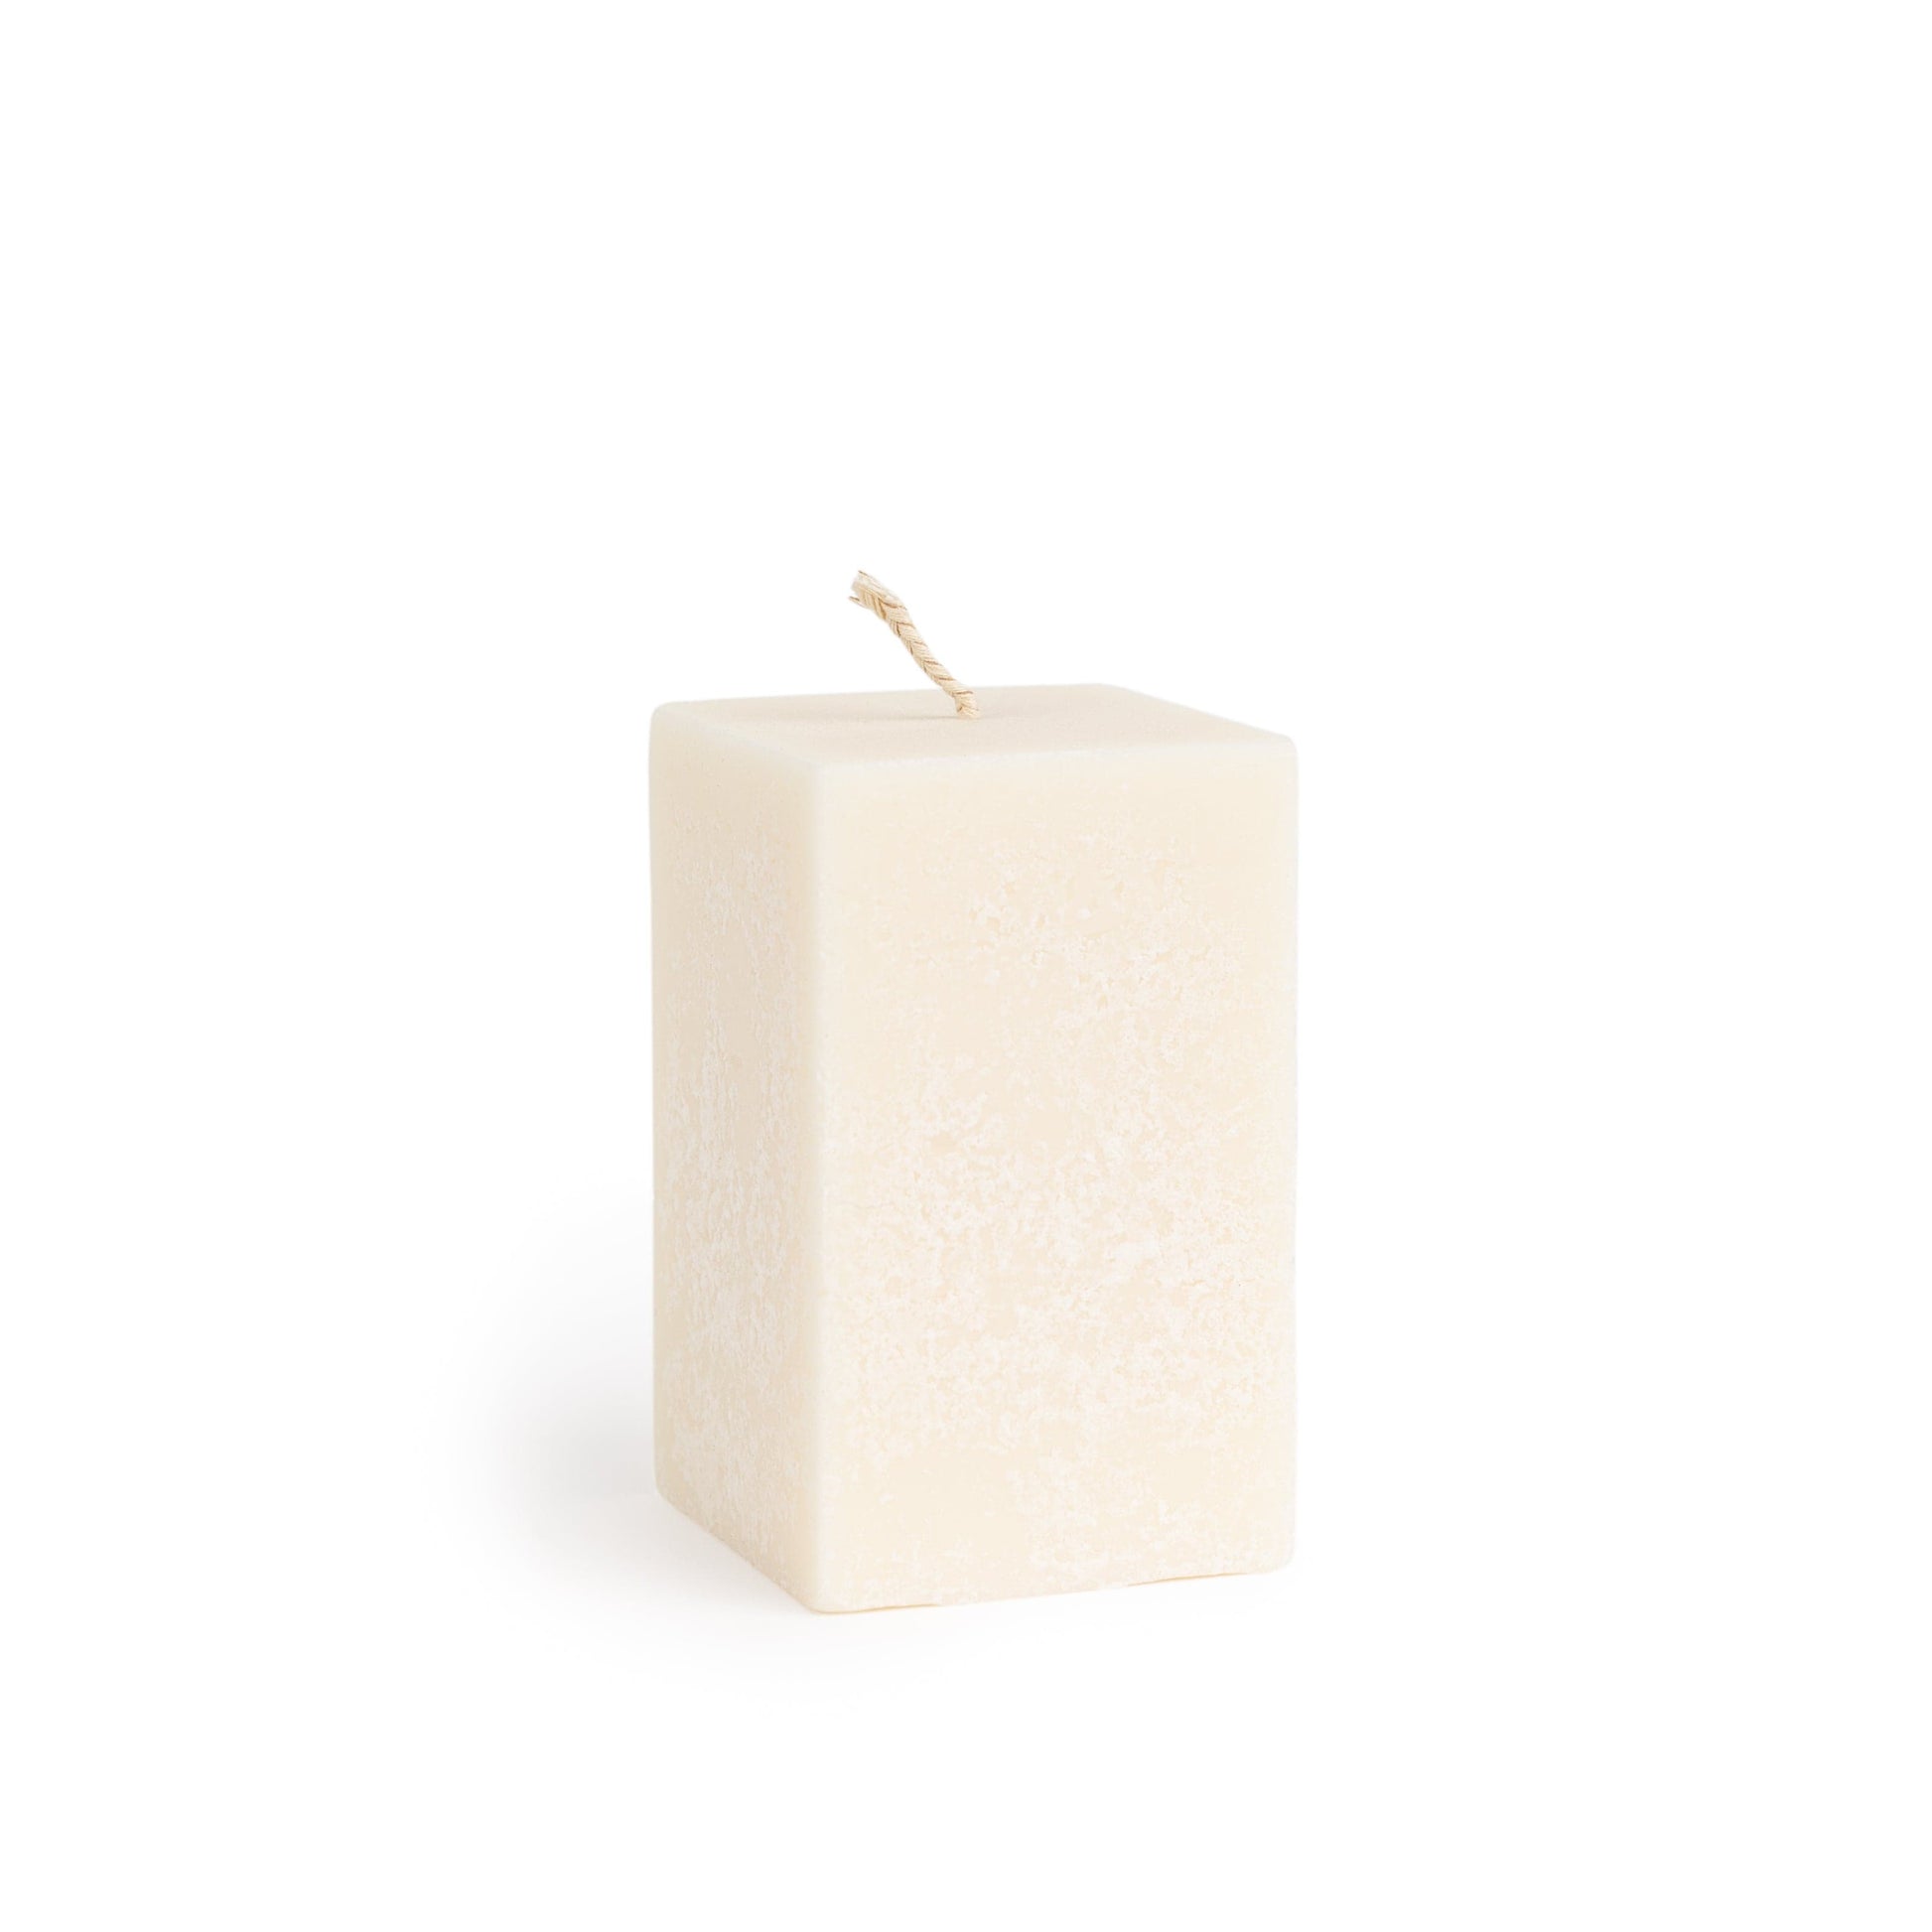 Vegan rectangular or cube shaped ivory pillar candles | Rapeseed wax - Premium Home Decor - Just €18.95! Shop now at San Rocco Italia